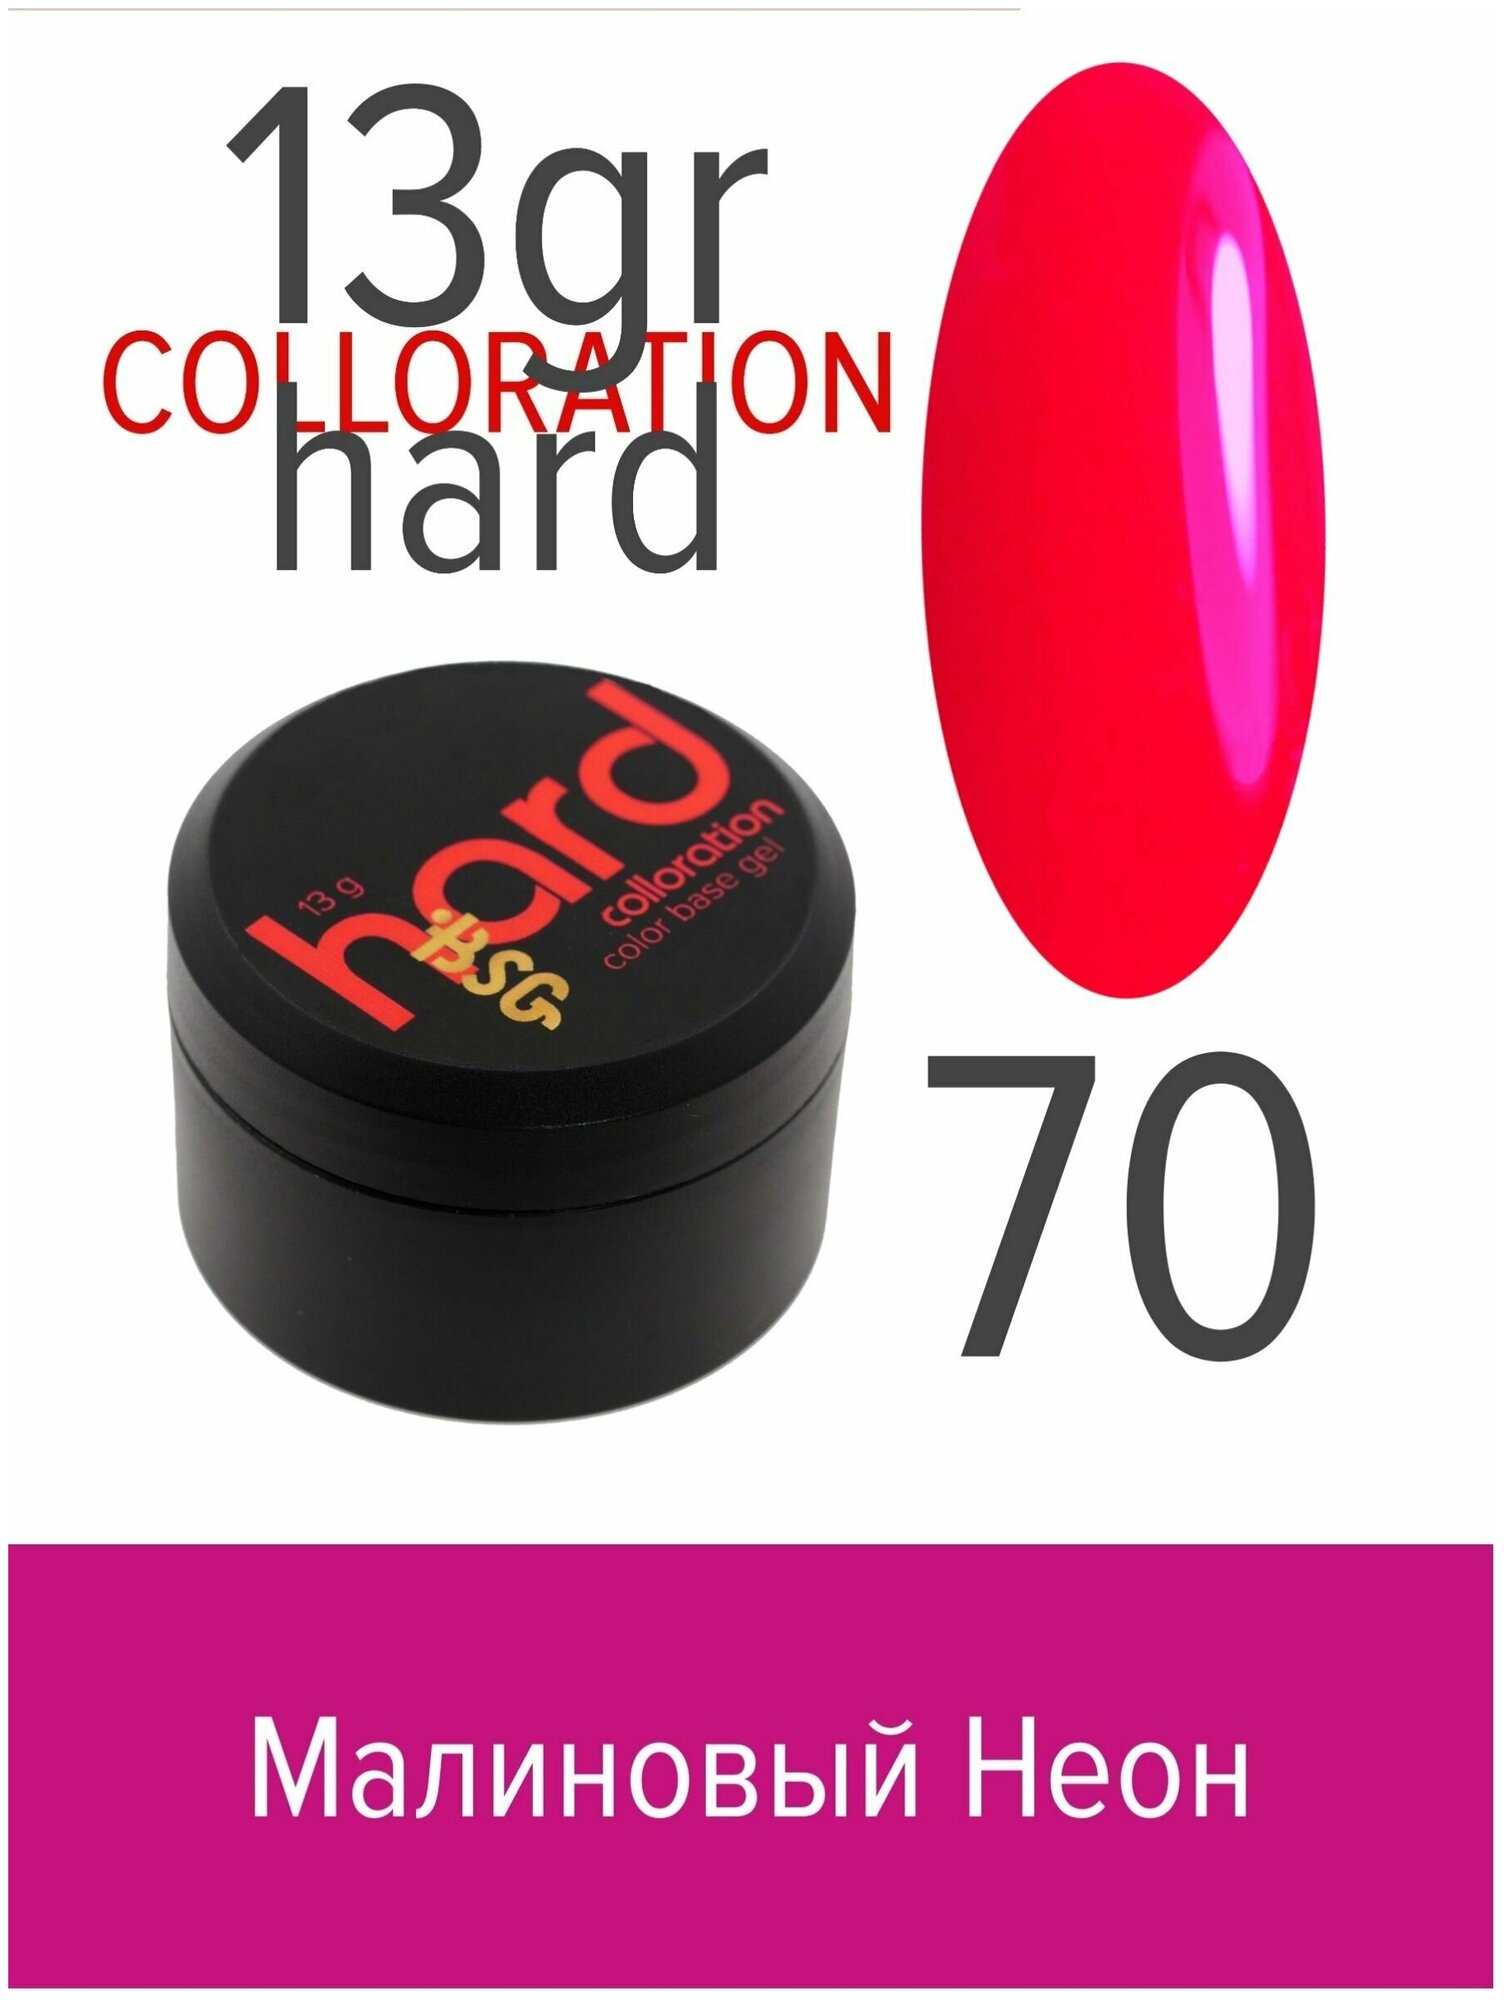 BSG Цветная жесткая база Colloration Hard №70 - Малиновый неон (13 г)